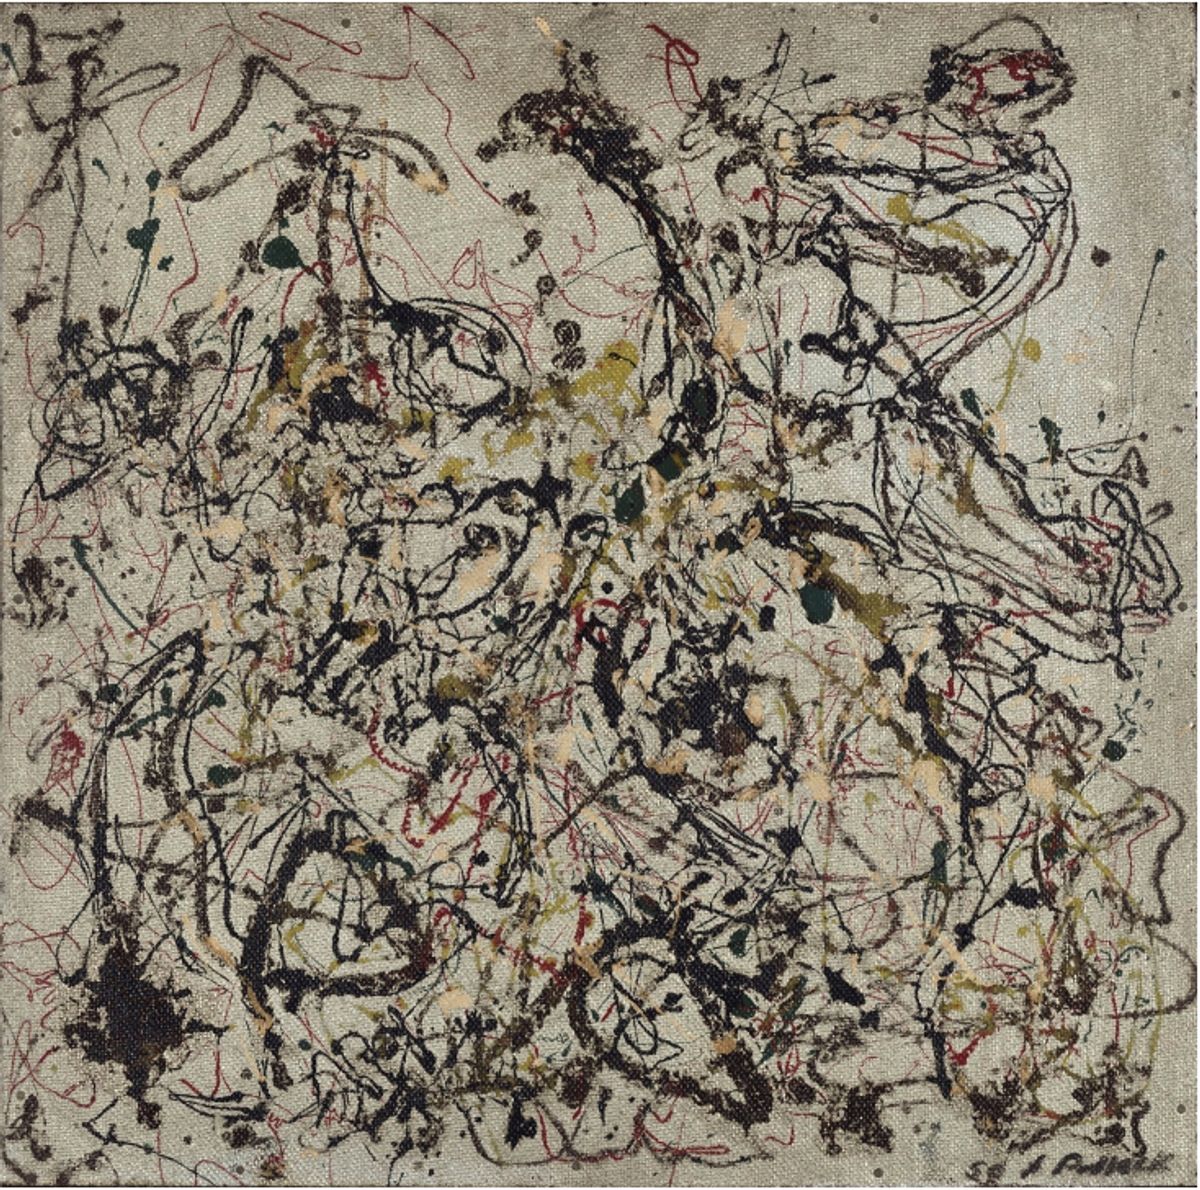 Jackson Pollock, “No. 16” (1950) 